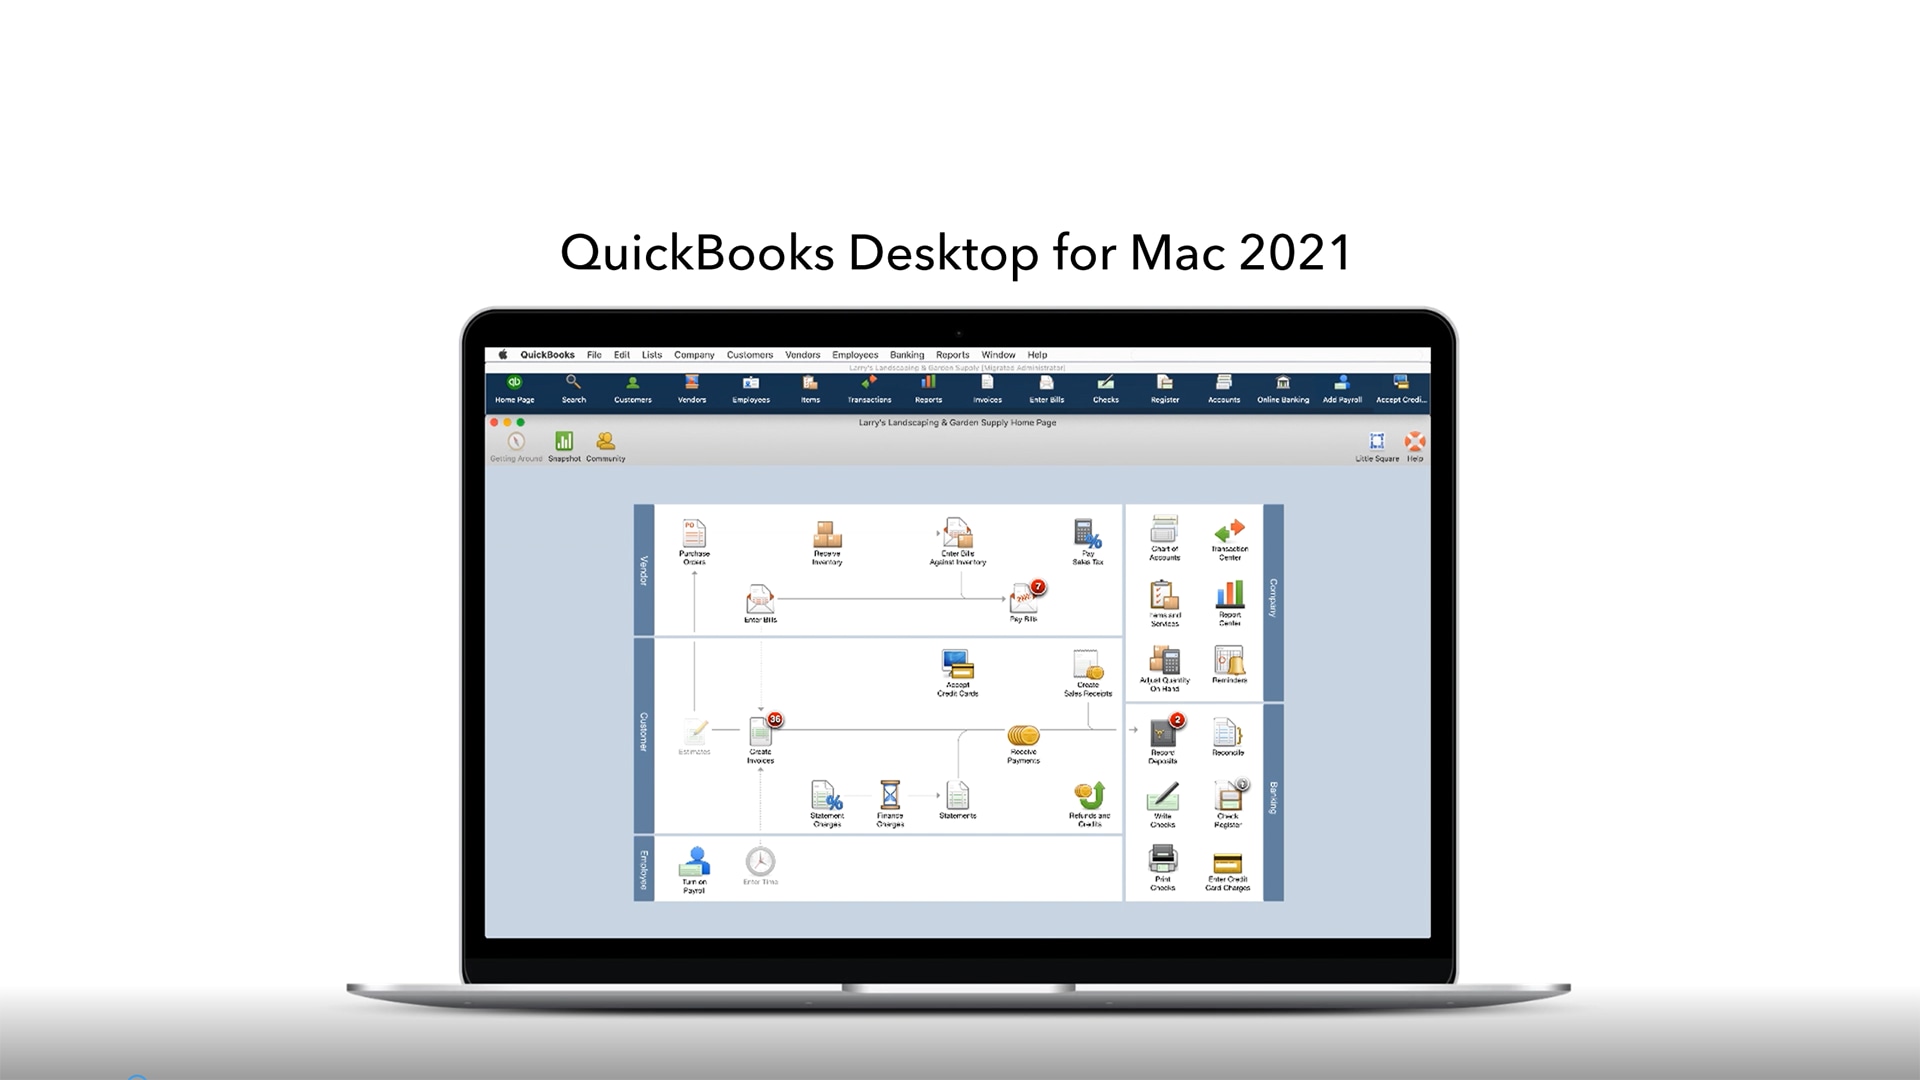 download intuit quickbooks for mac